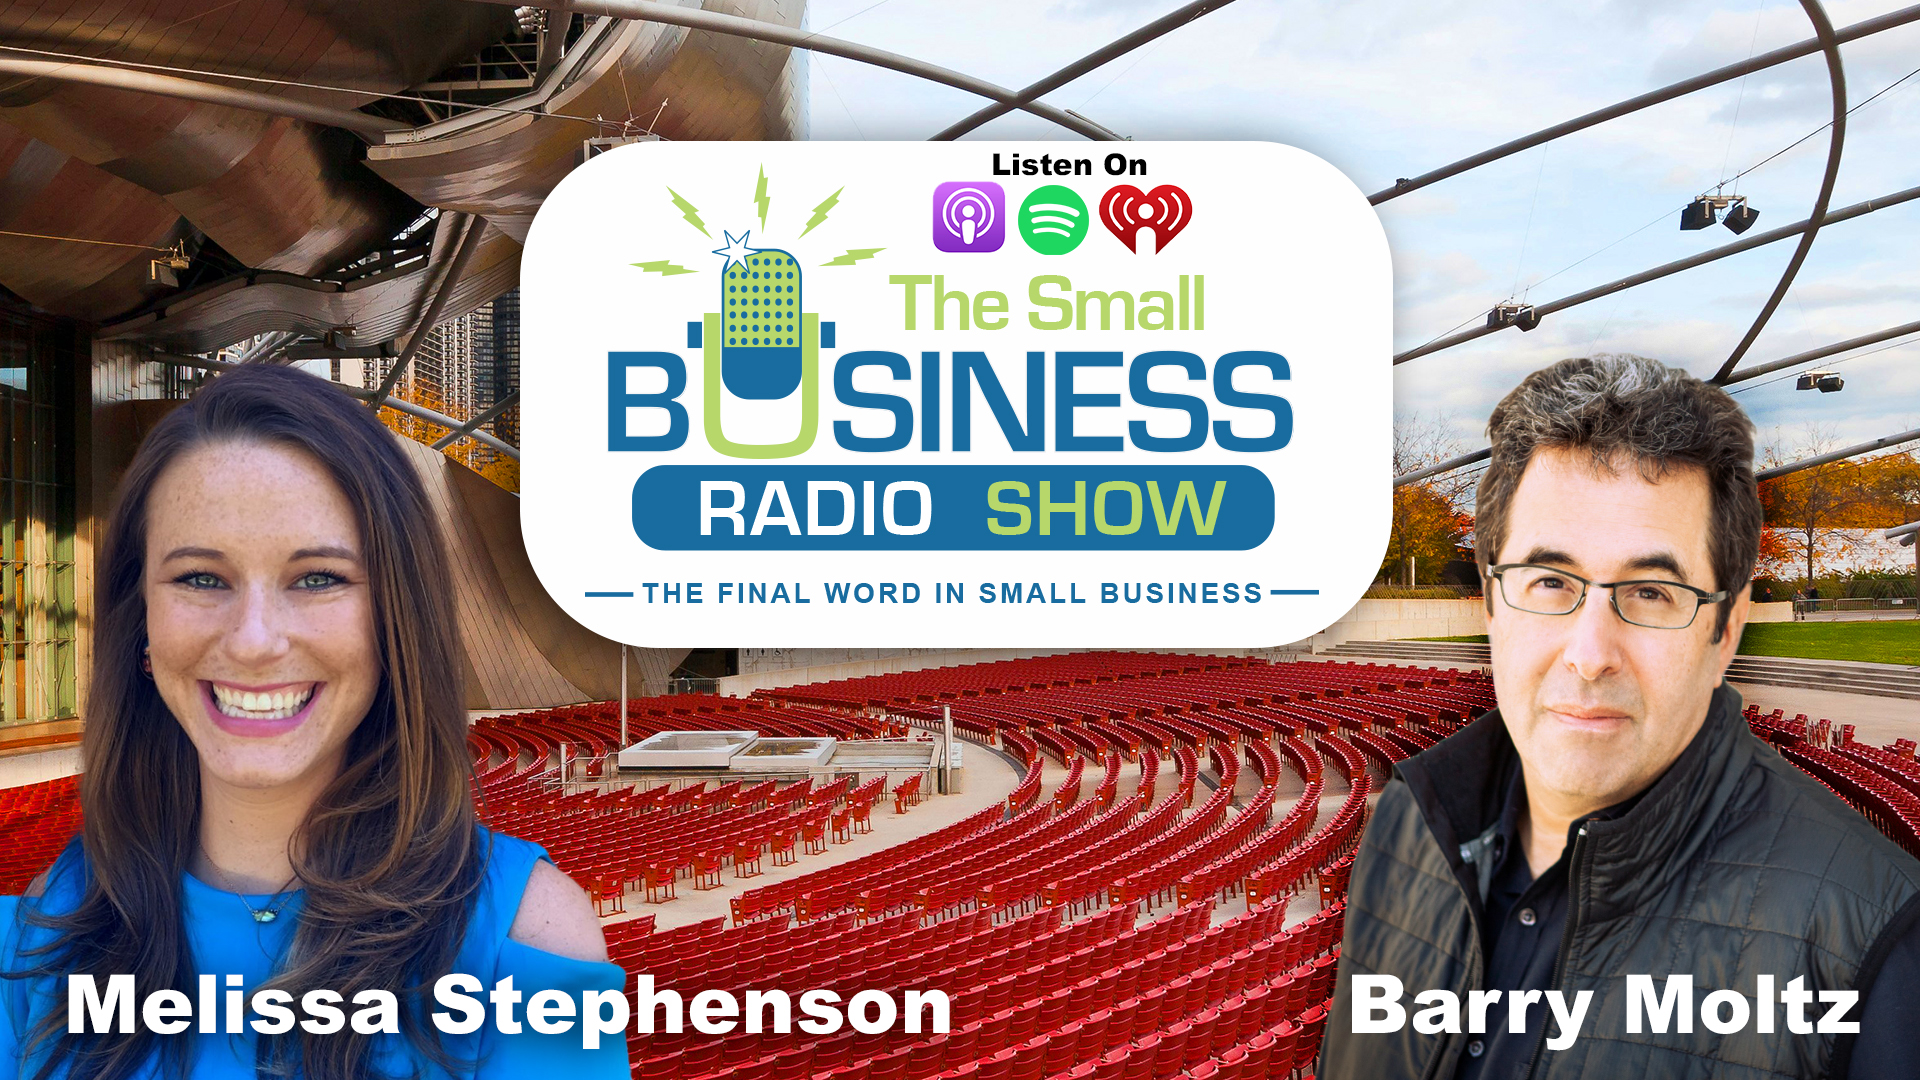 Melissa Stephenson on The Small Business Radio Show